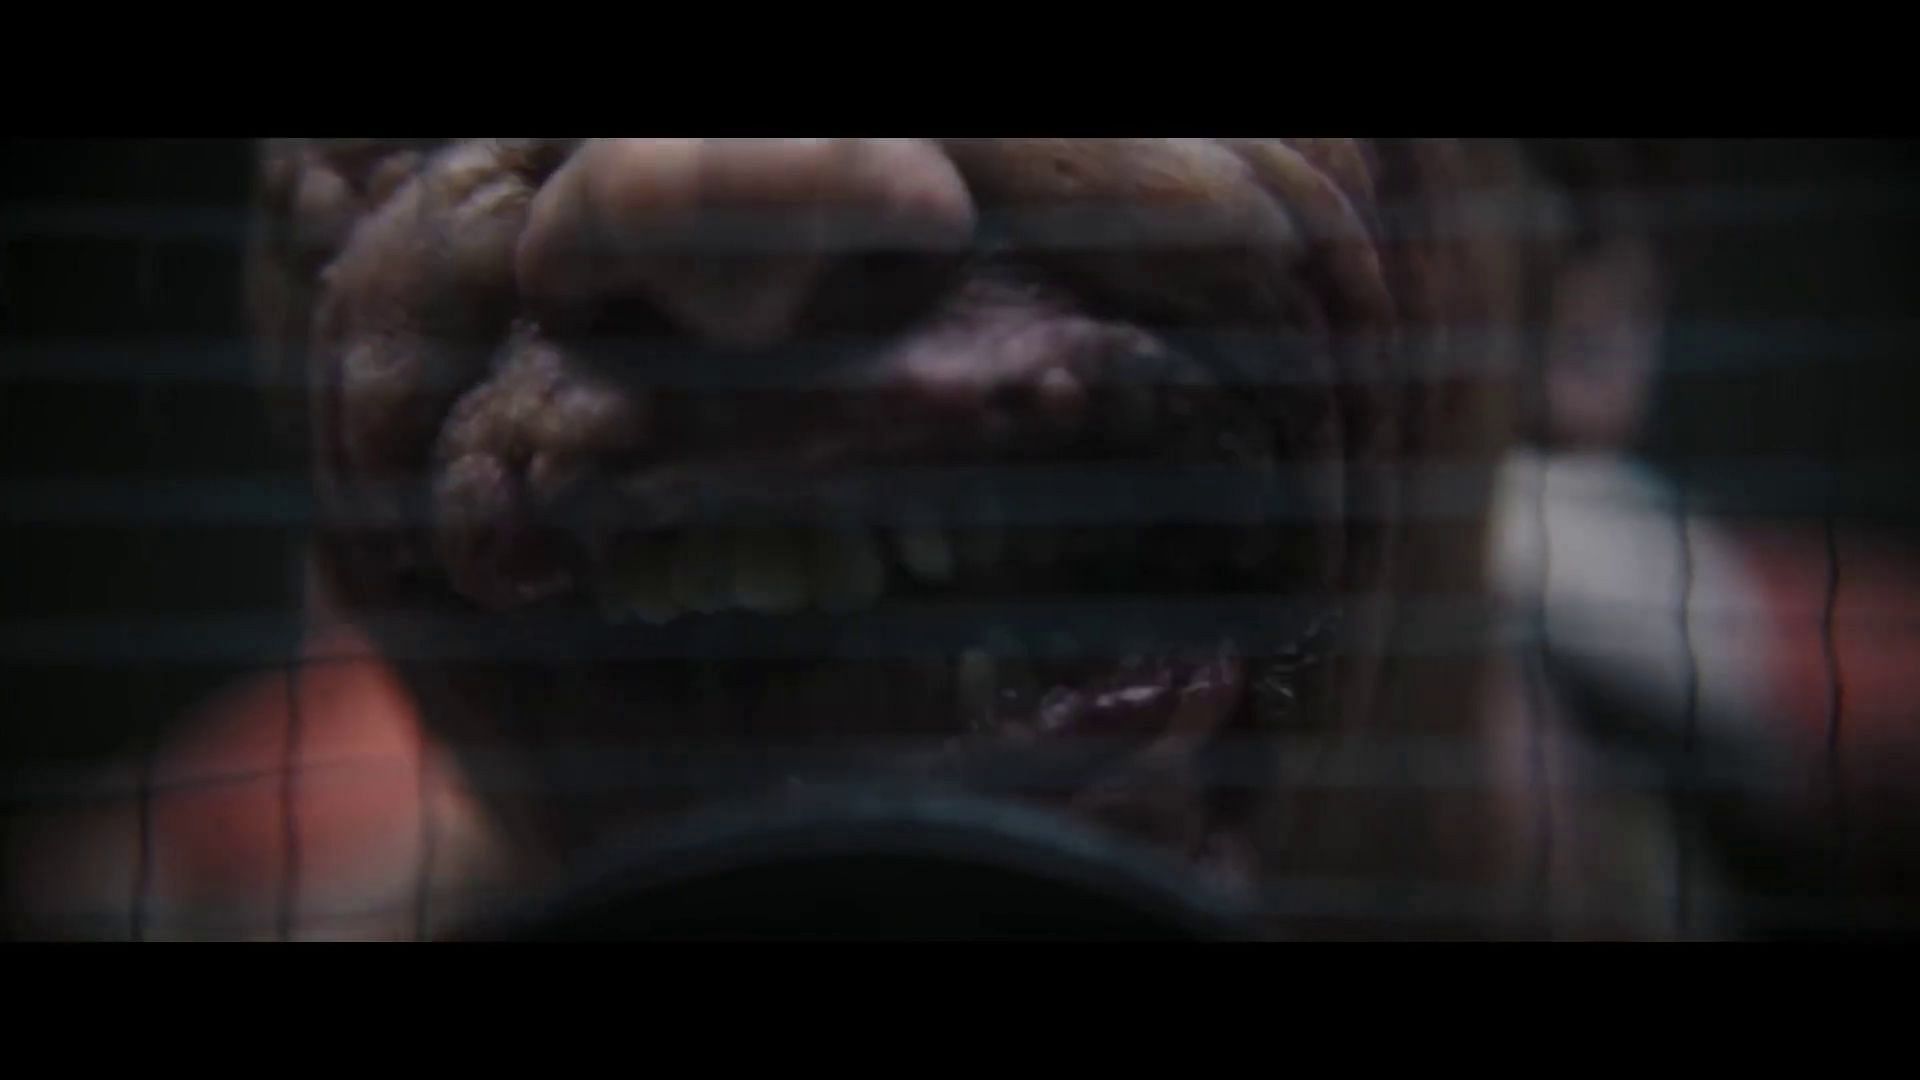 His face is burnt and his teeth deformed in the scene (Image via Warner Bros.)